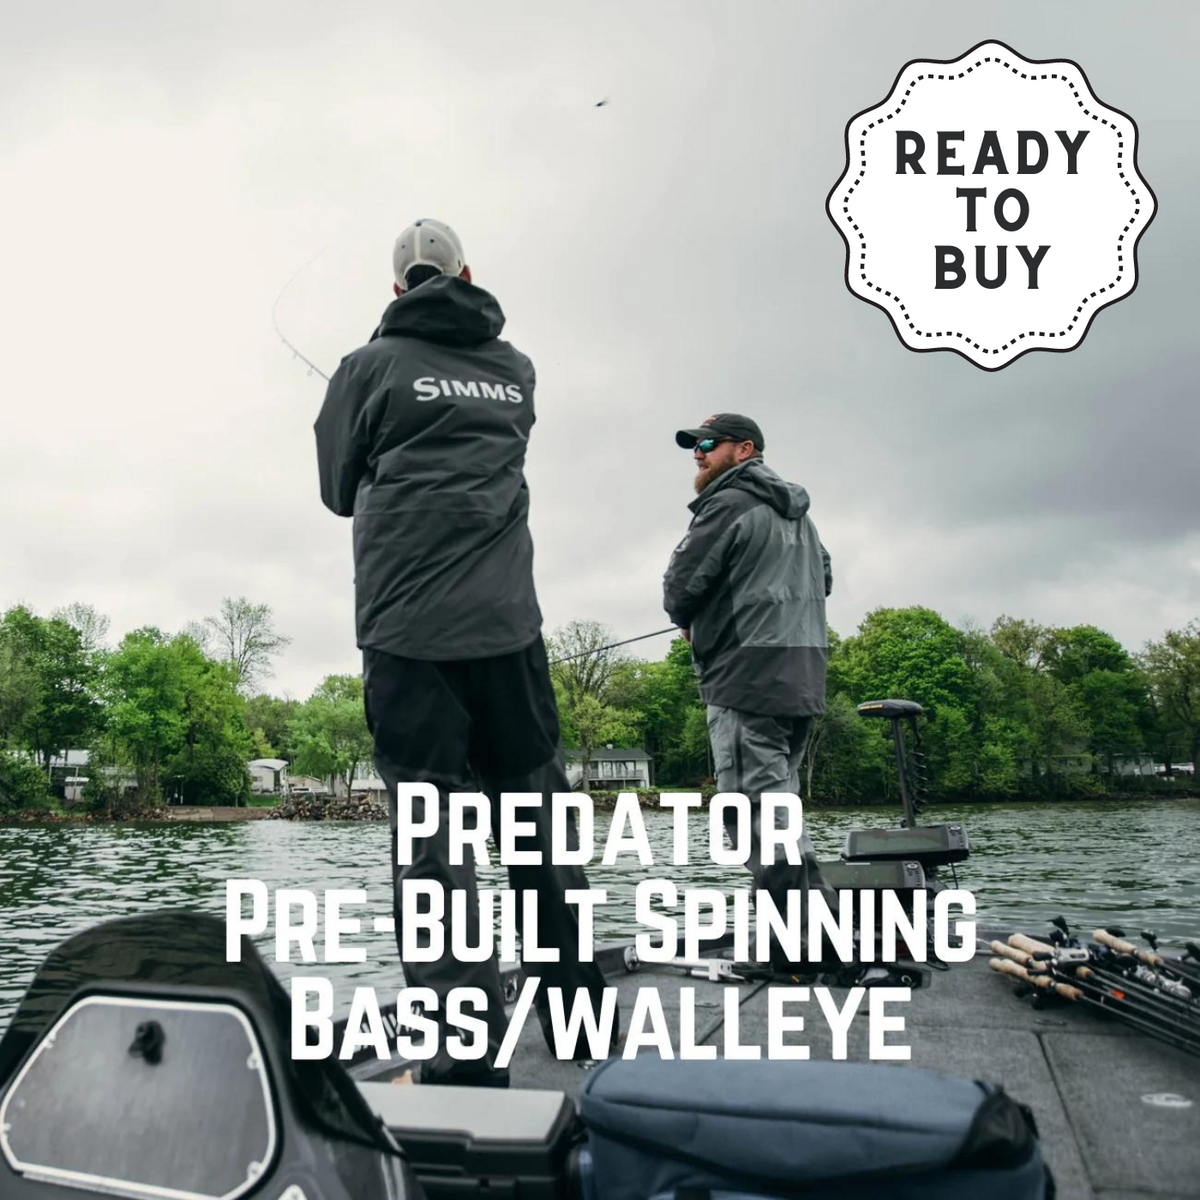 Thorne Bros. Predator Bass/Walleye Rods - Spinning